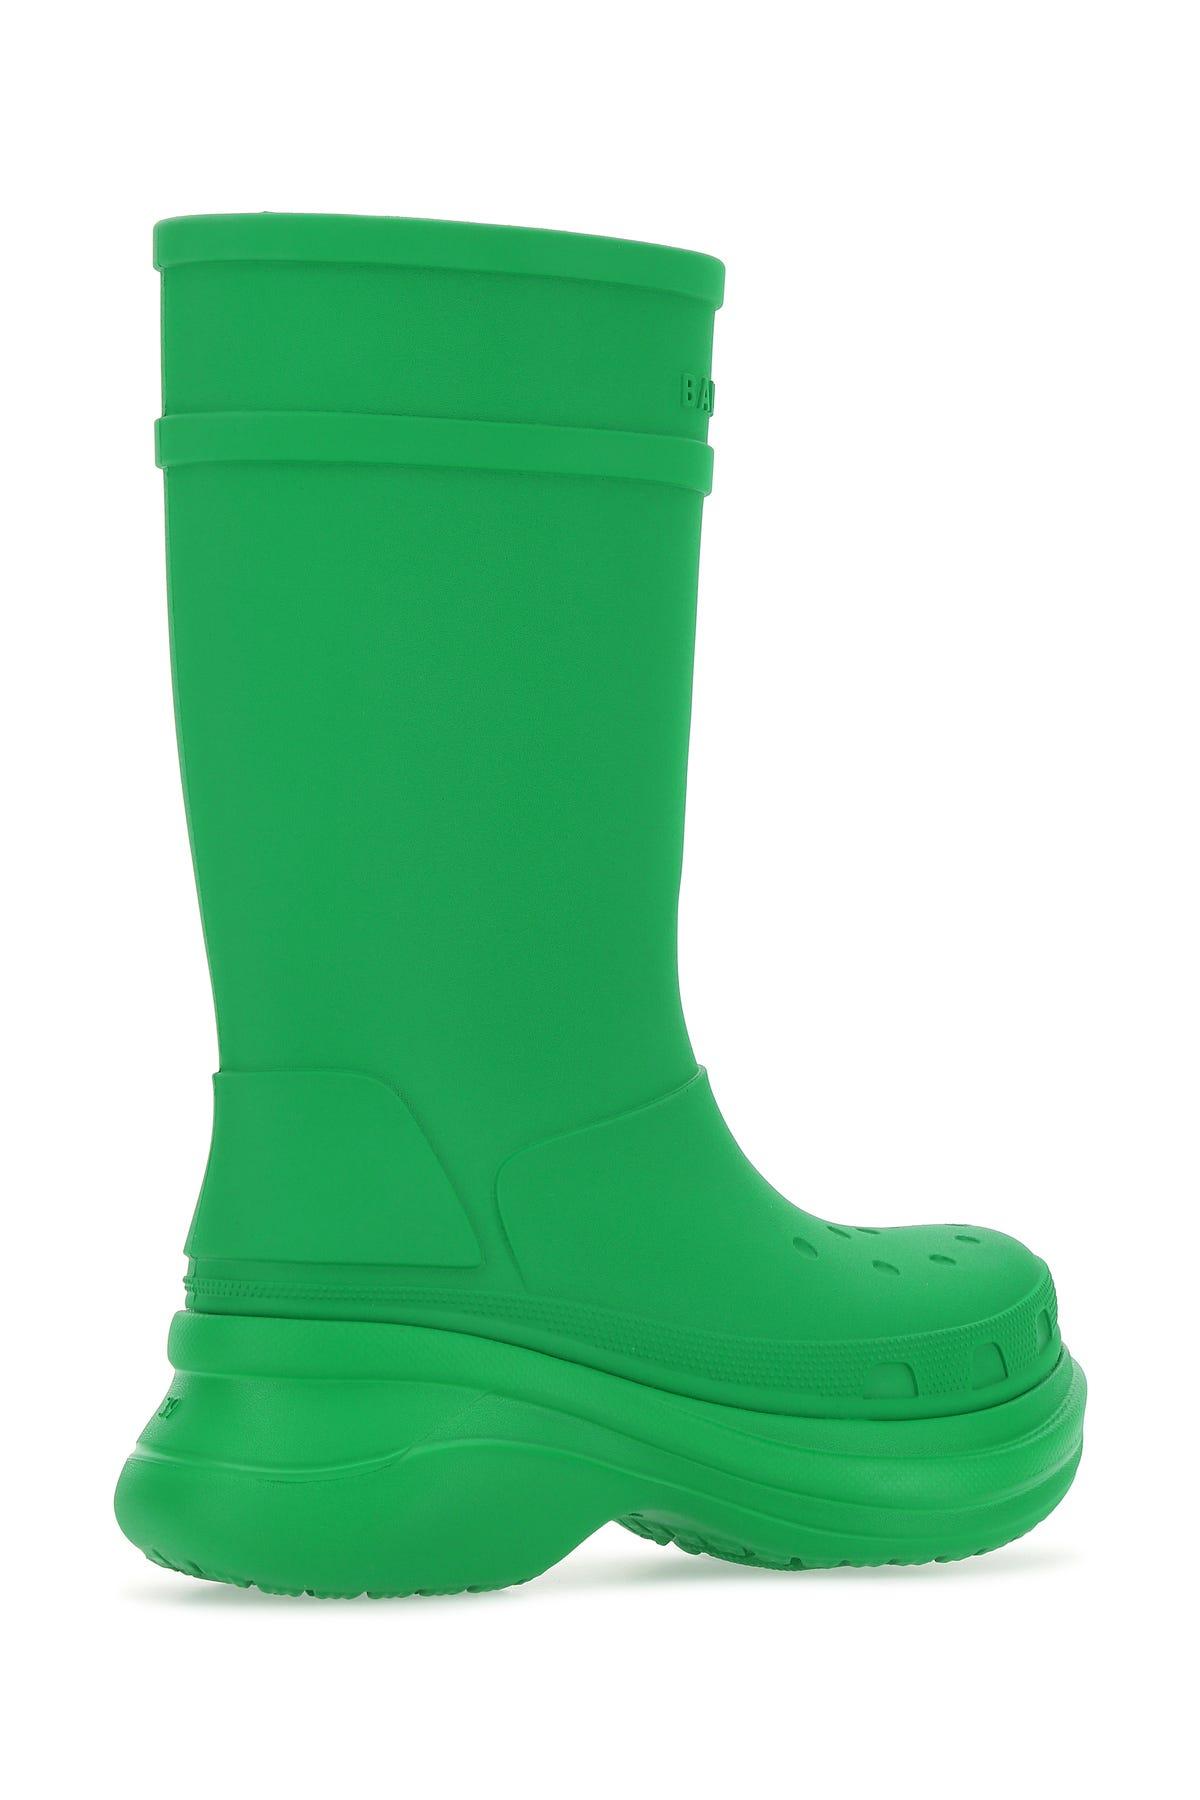 Balenciaga Grass Rubber Boots in Green | Lyst